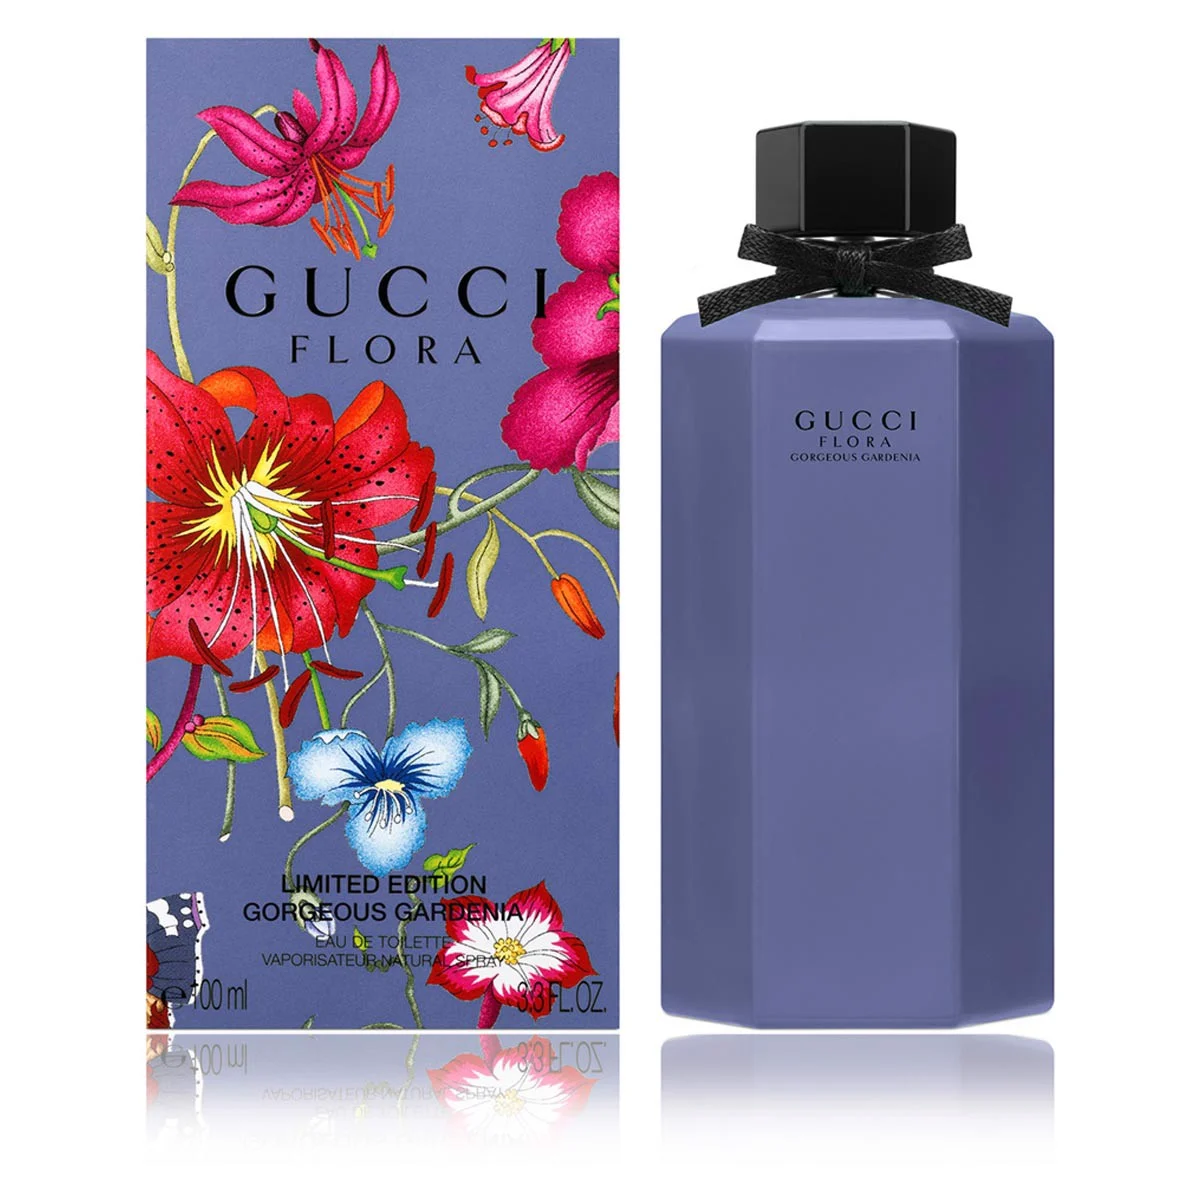 Gucci Flora Gorgeous Gardenia Limited Edition 2020 